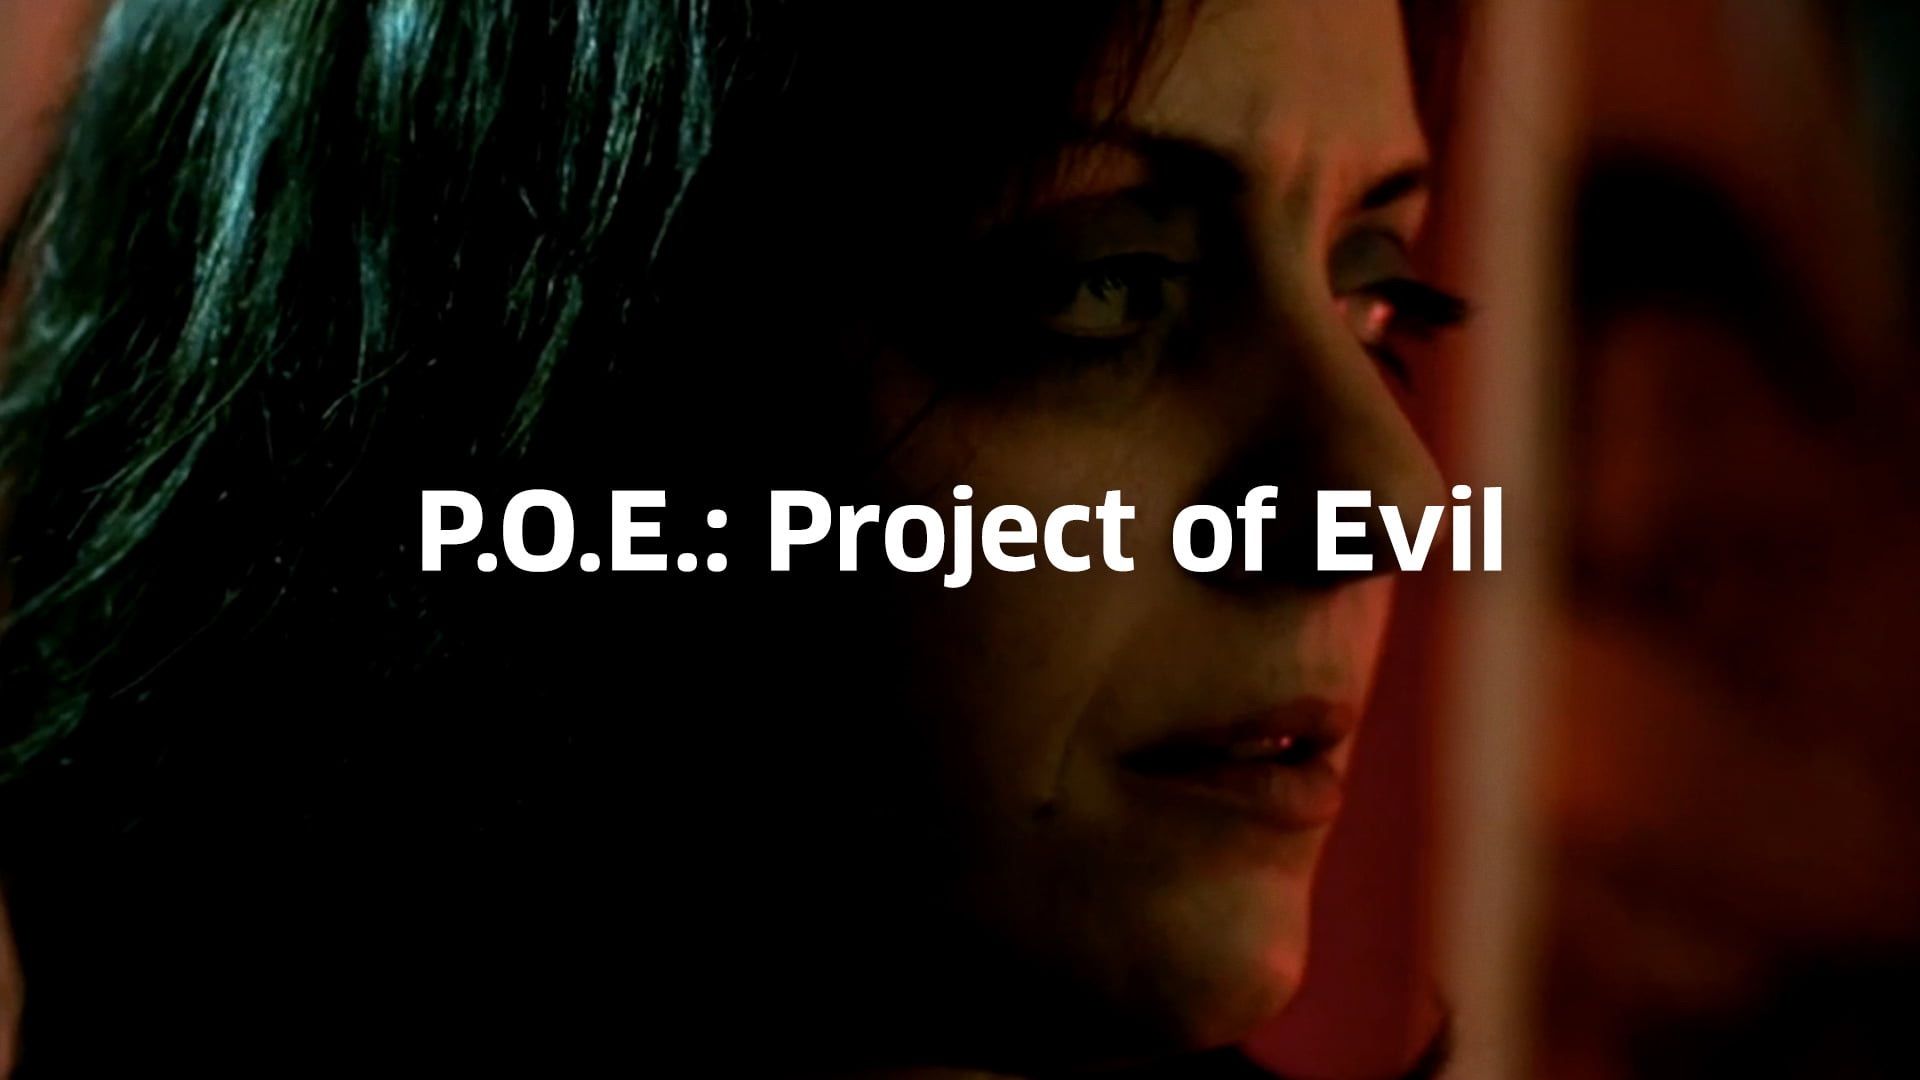 P.O.E.: Project of Evil Backdrop